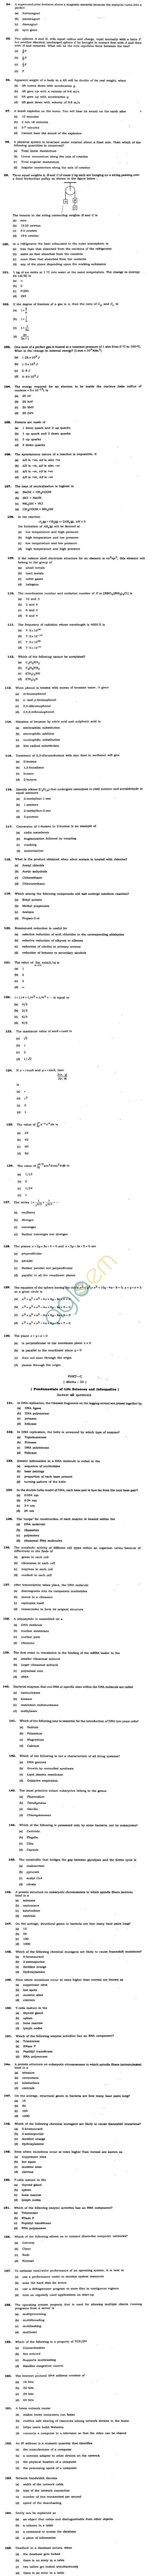 JNU CEEB Question Papers 2012 M.tech. - Biotechnology